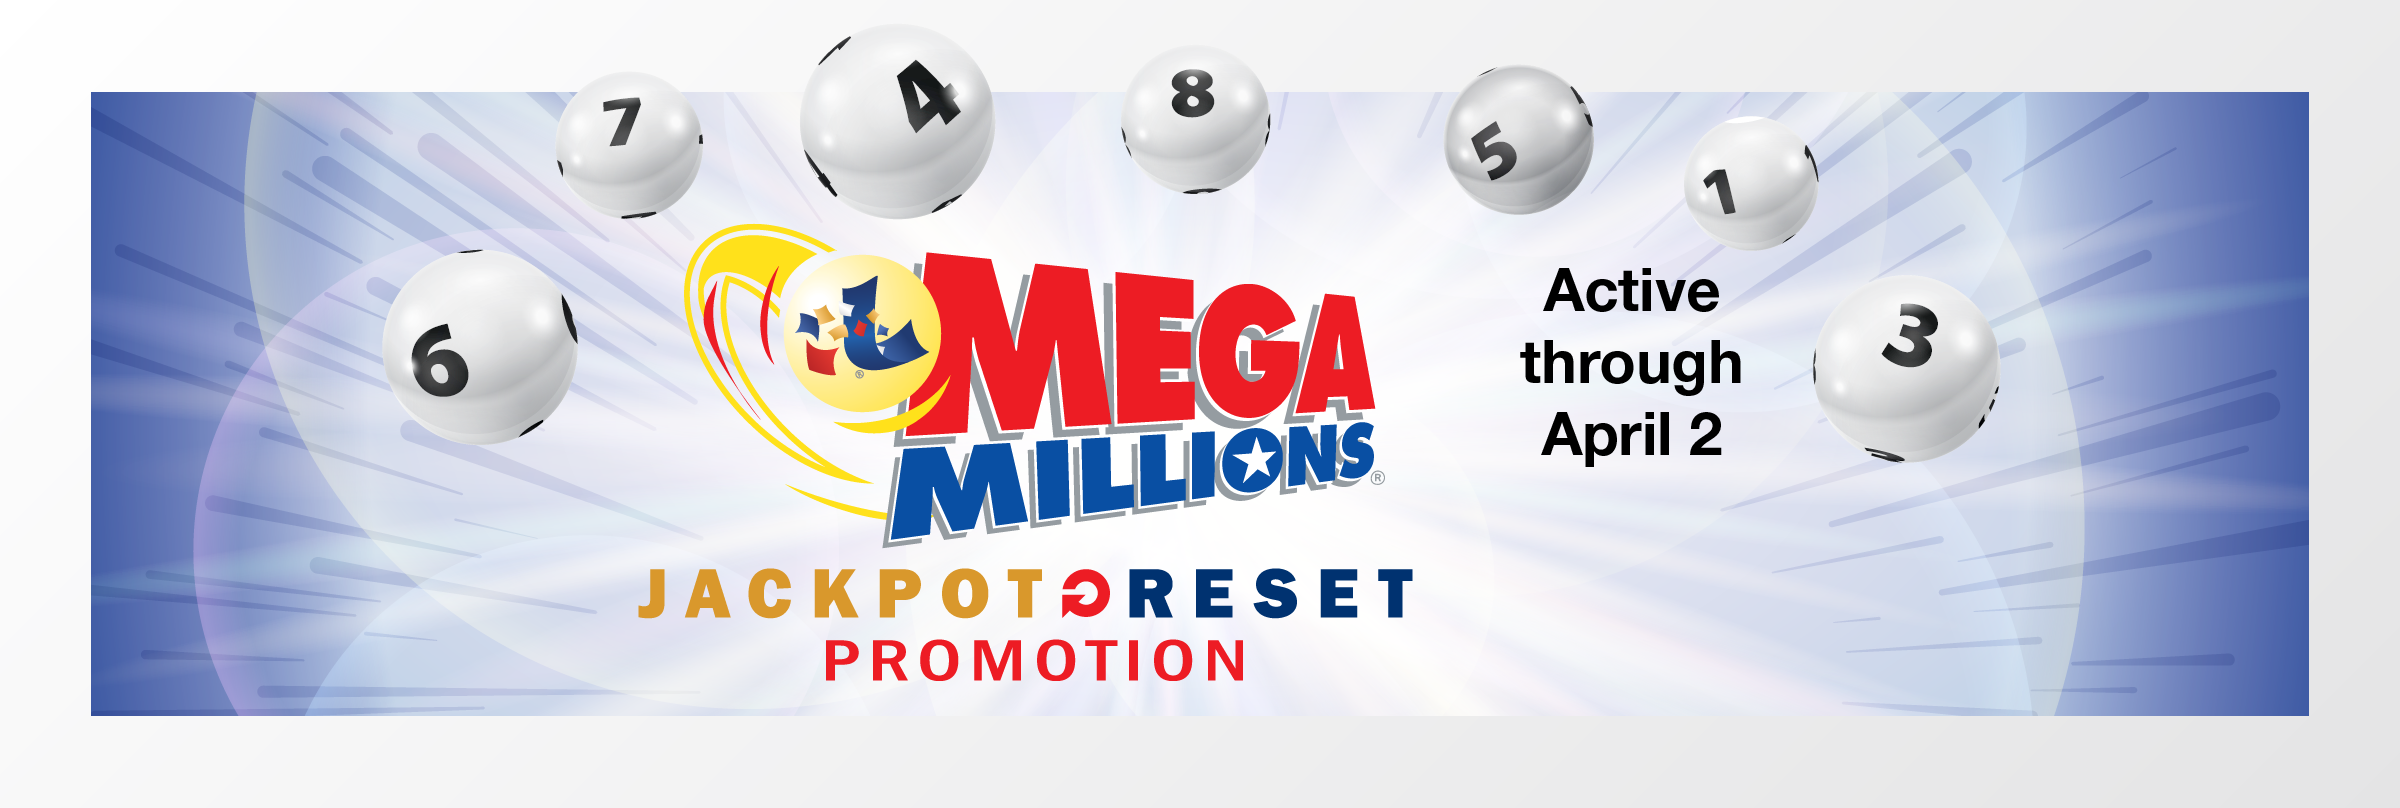 Mega Millions Jackpot Reset April 2